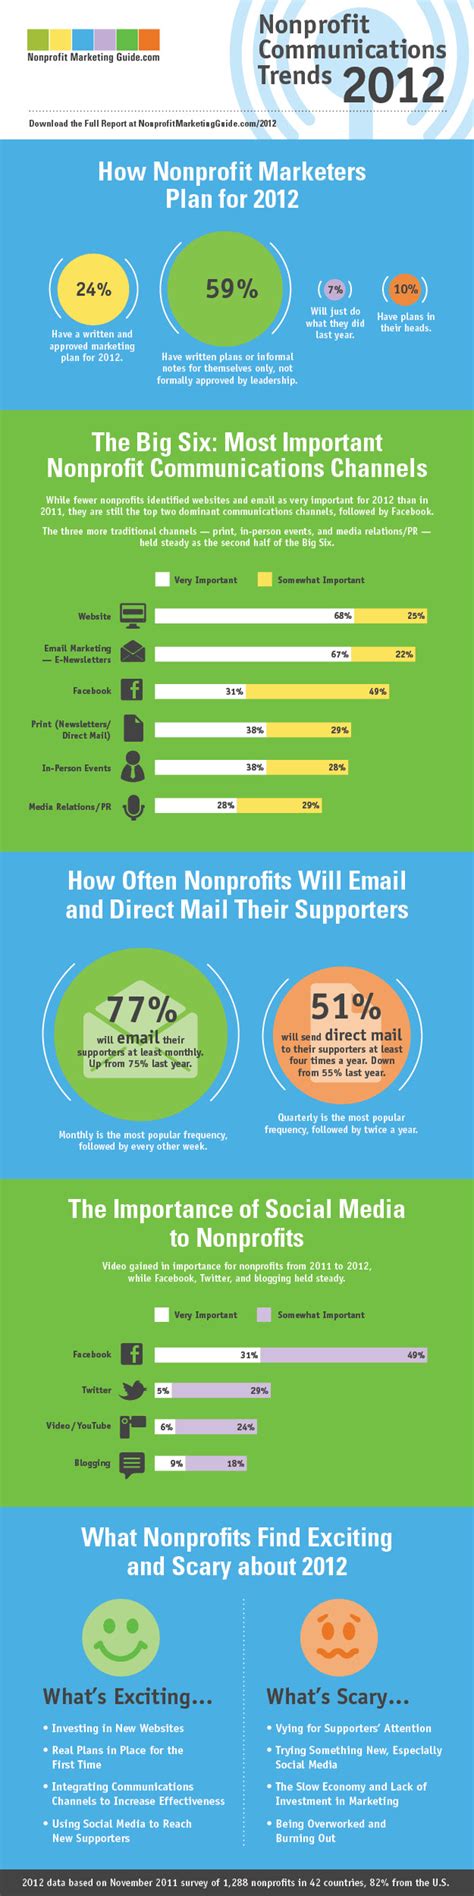 2012 Nonprofit Communications Trends Infographic Kivis Nonprofit